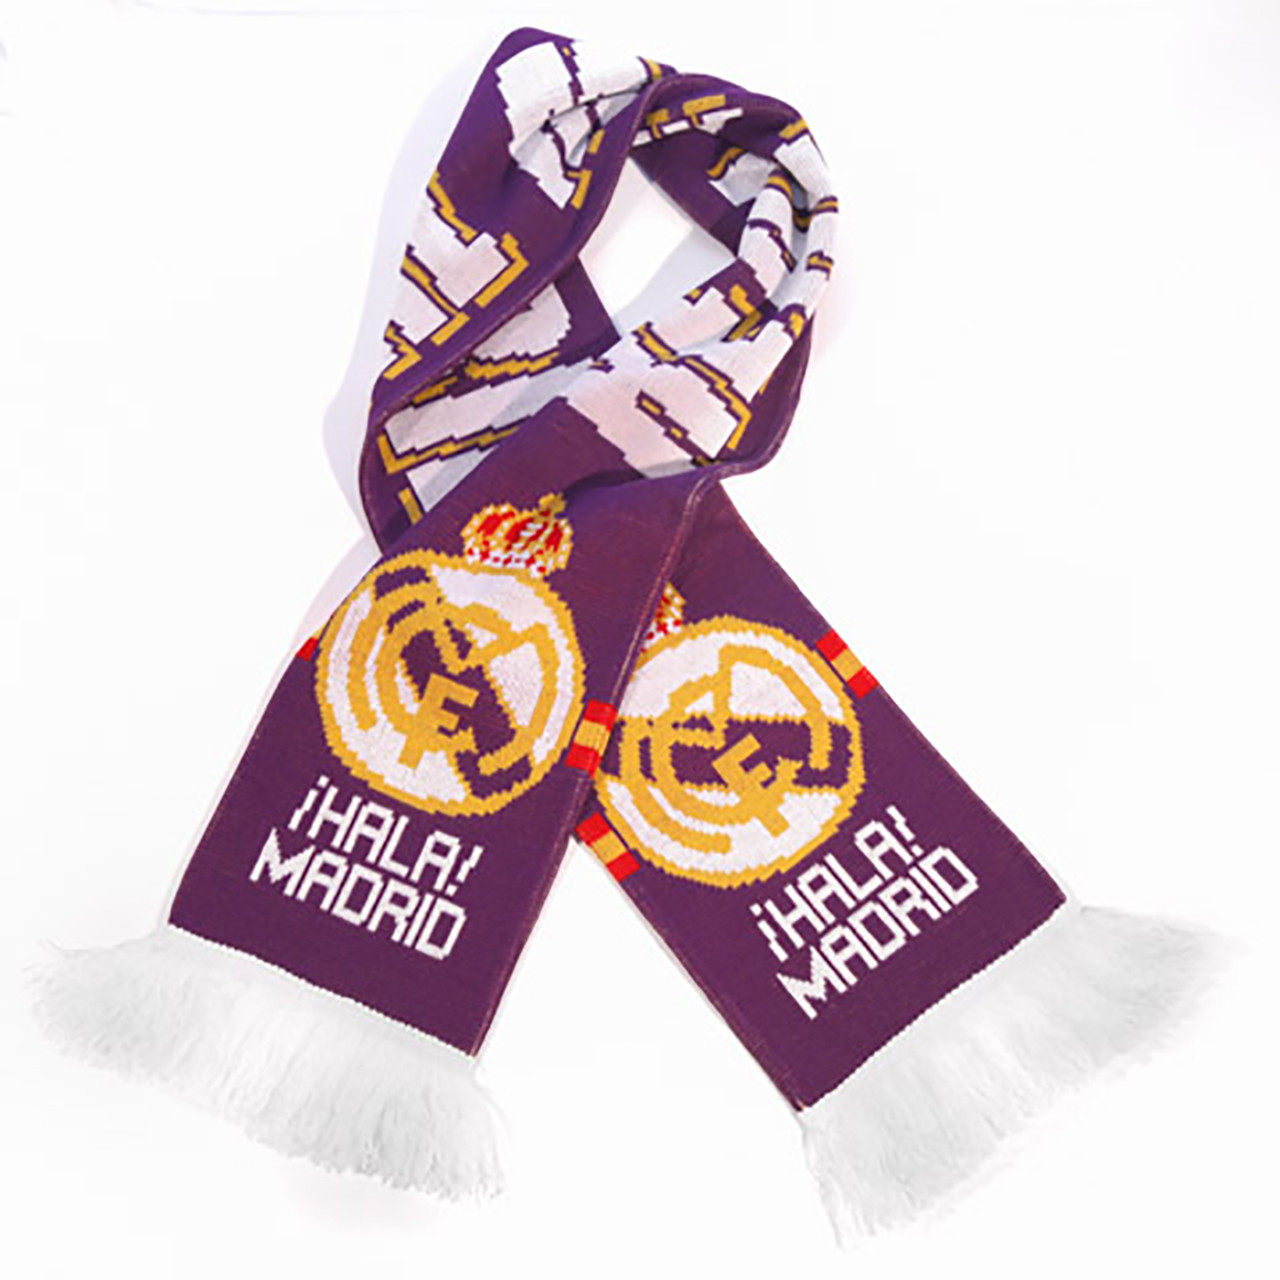 real madrid scarves